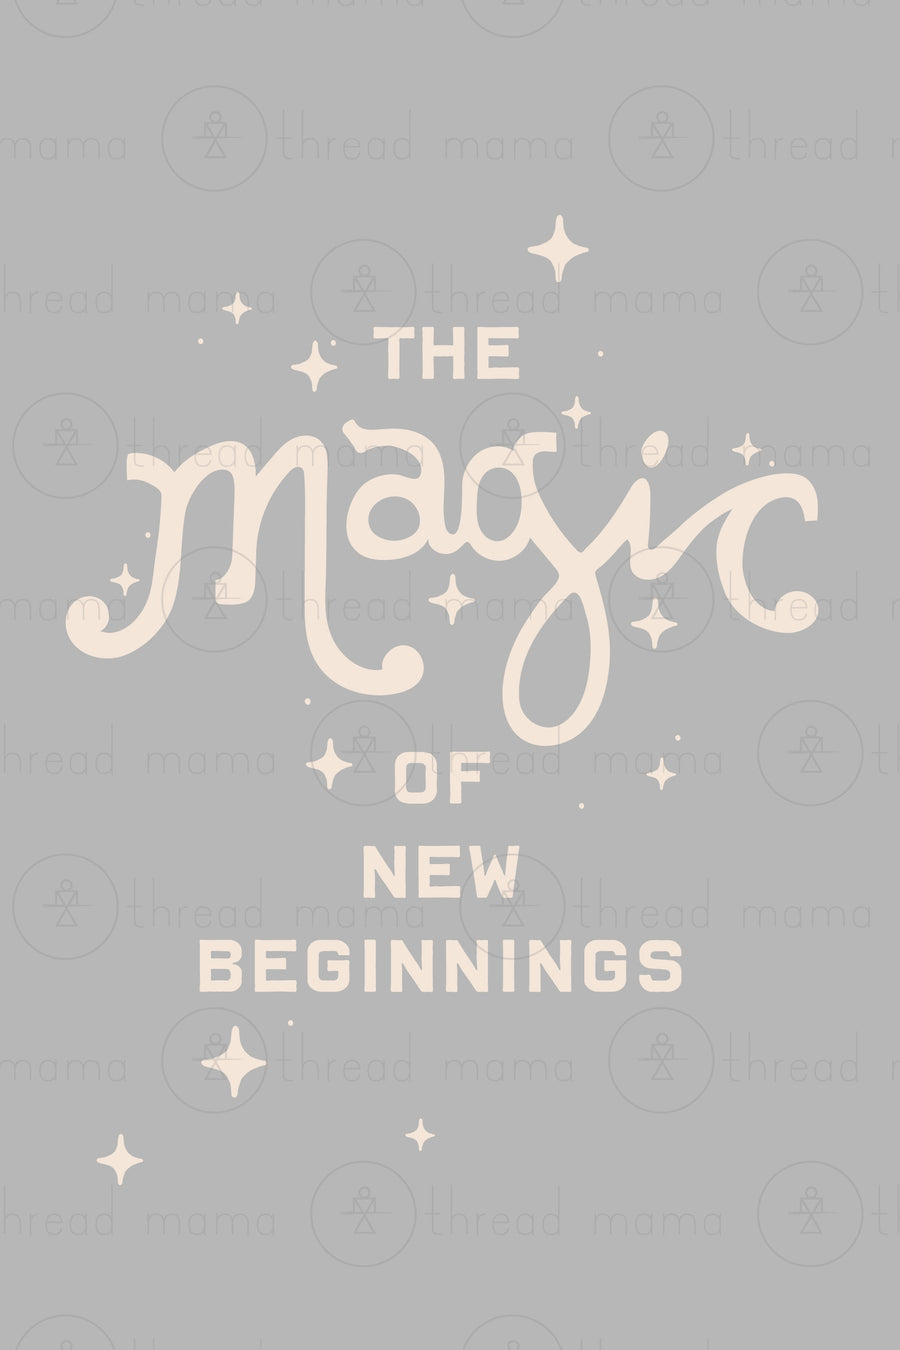 The Magic of New Beginnings - Set